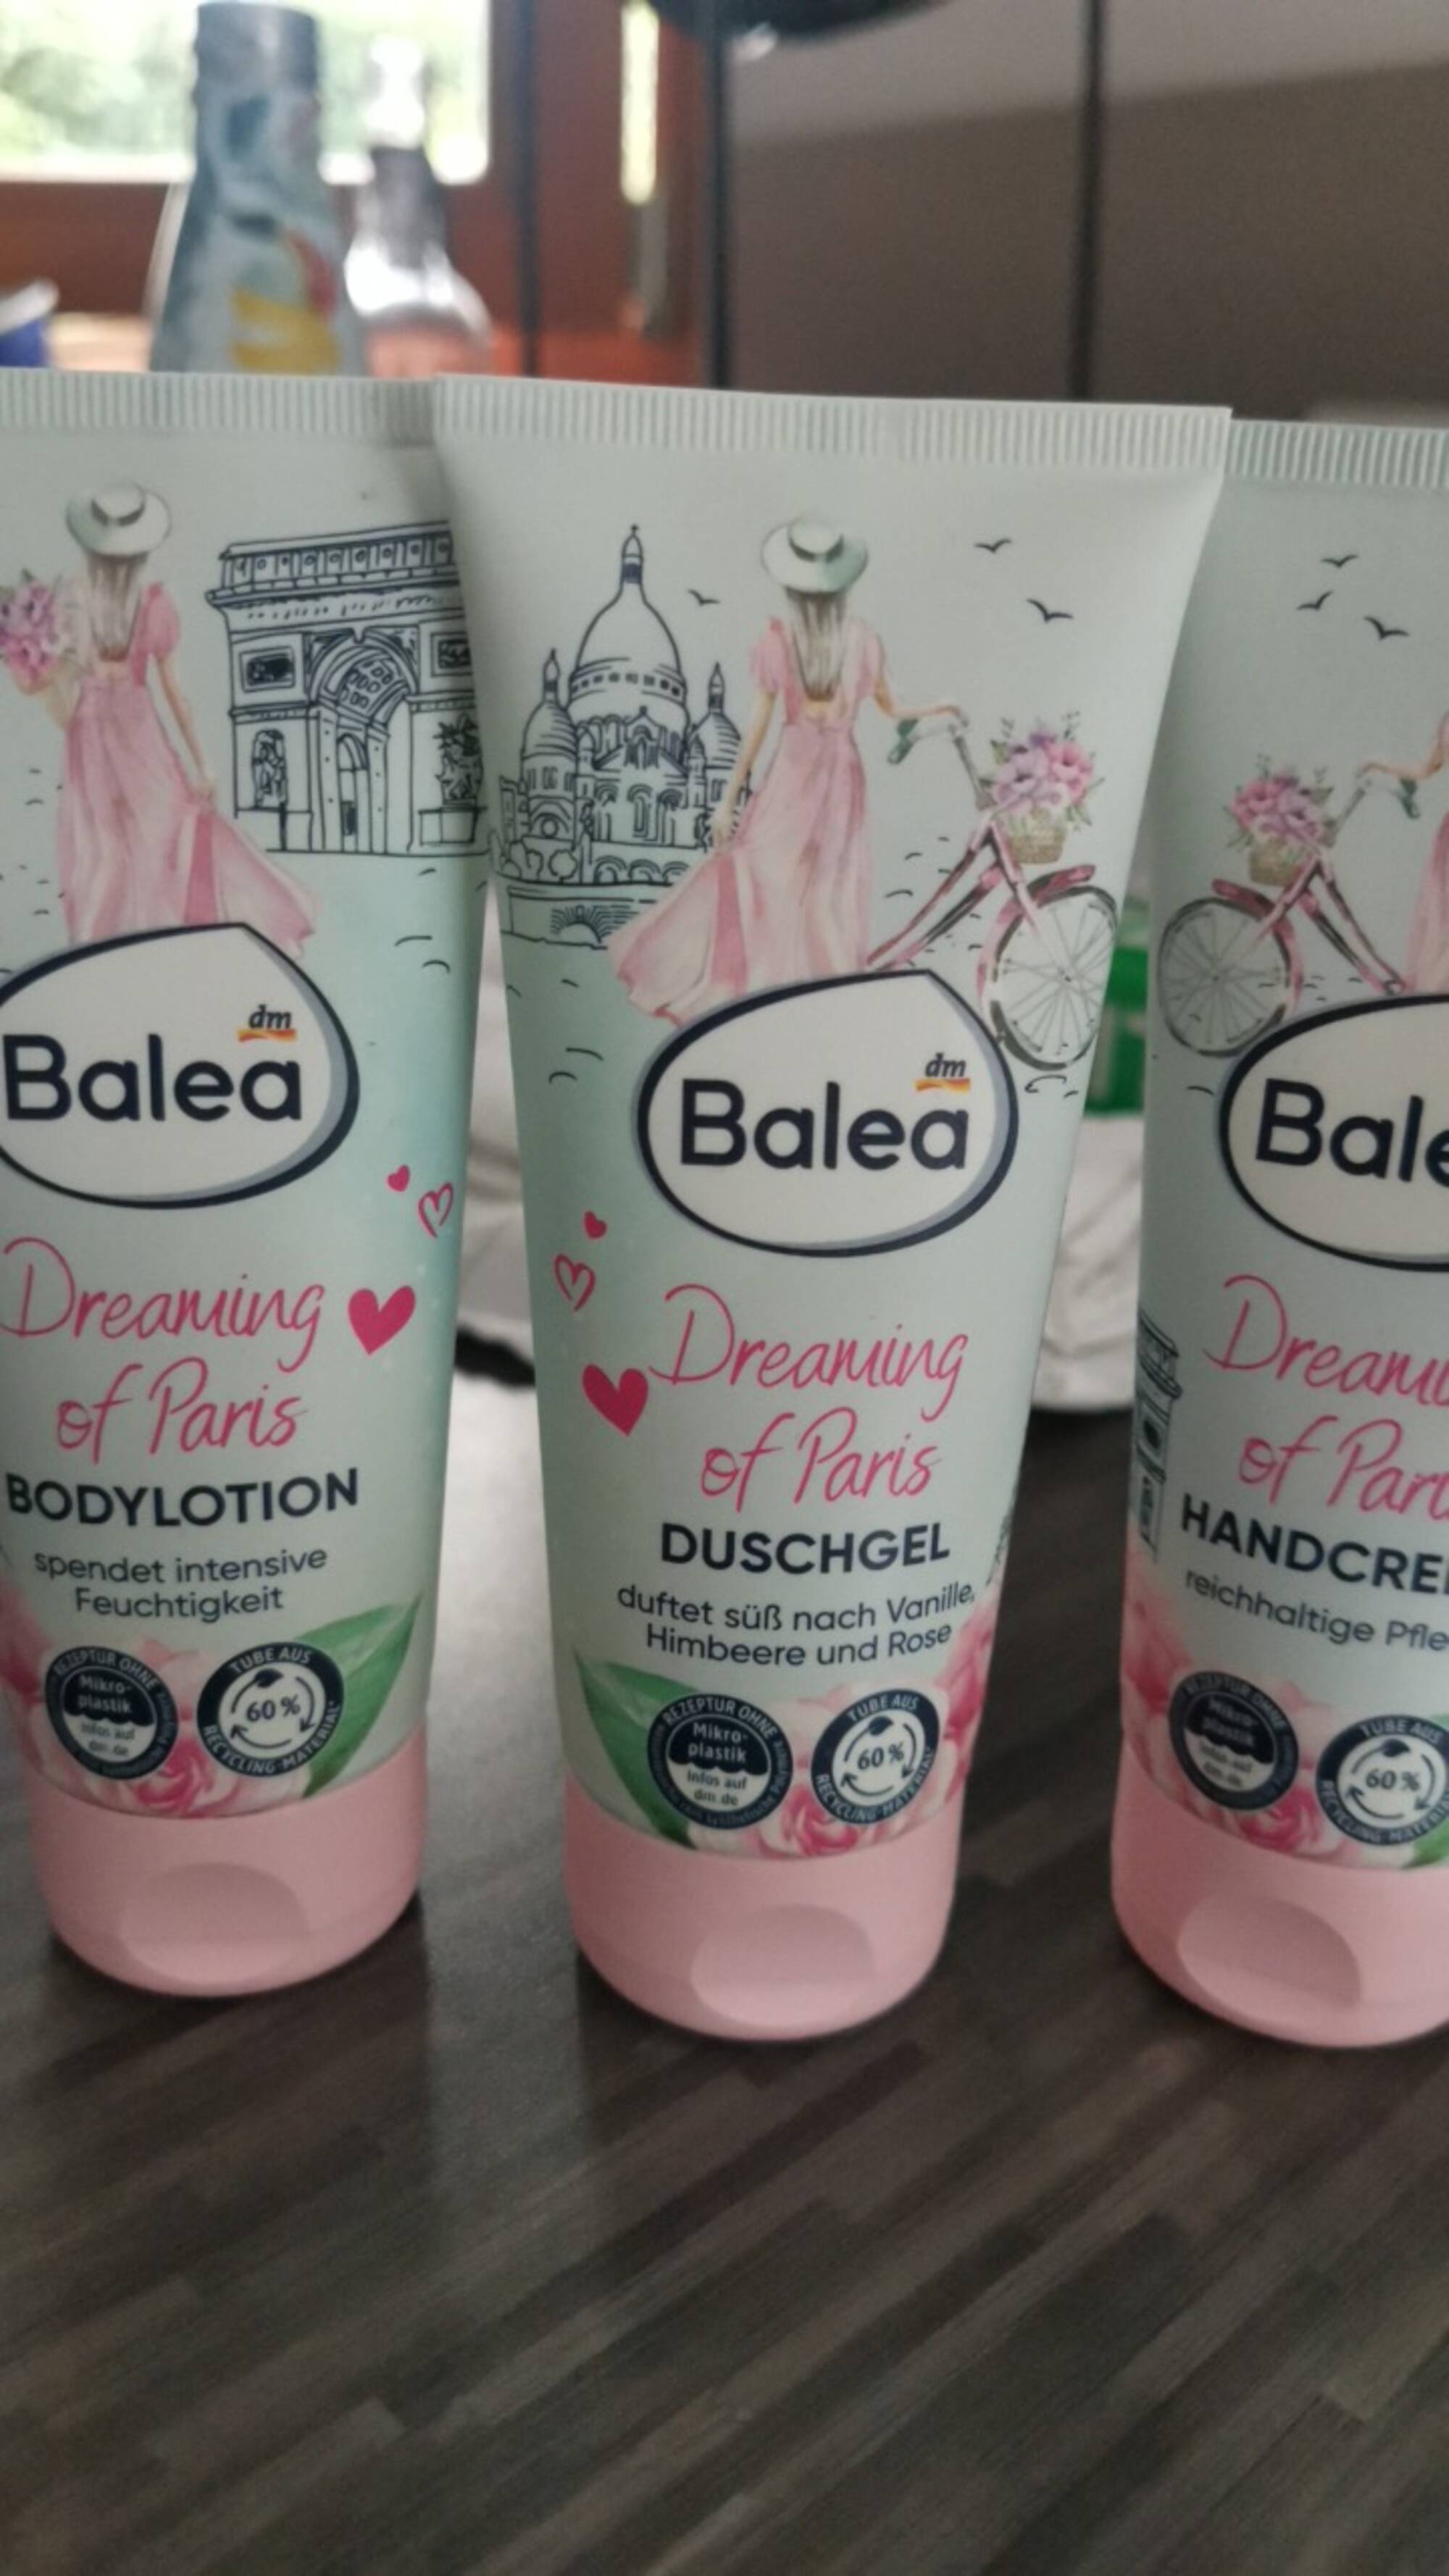 BALEA DM - Dreaming of Paris- body lotion